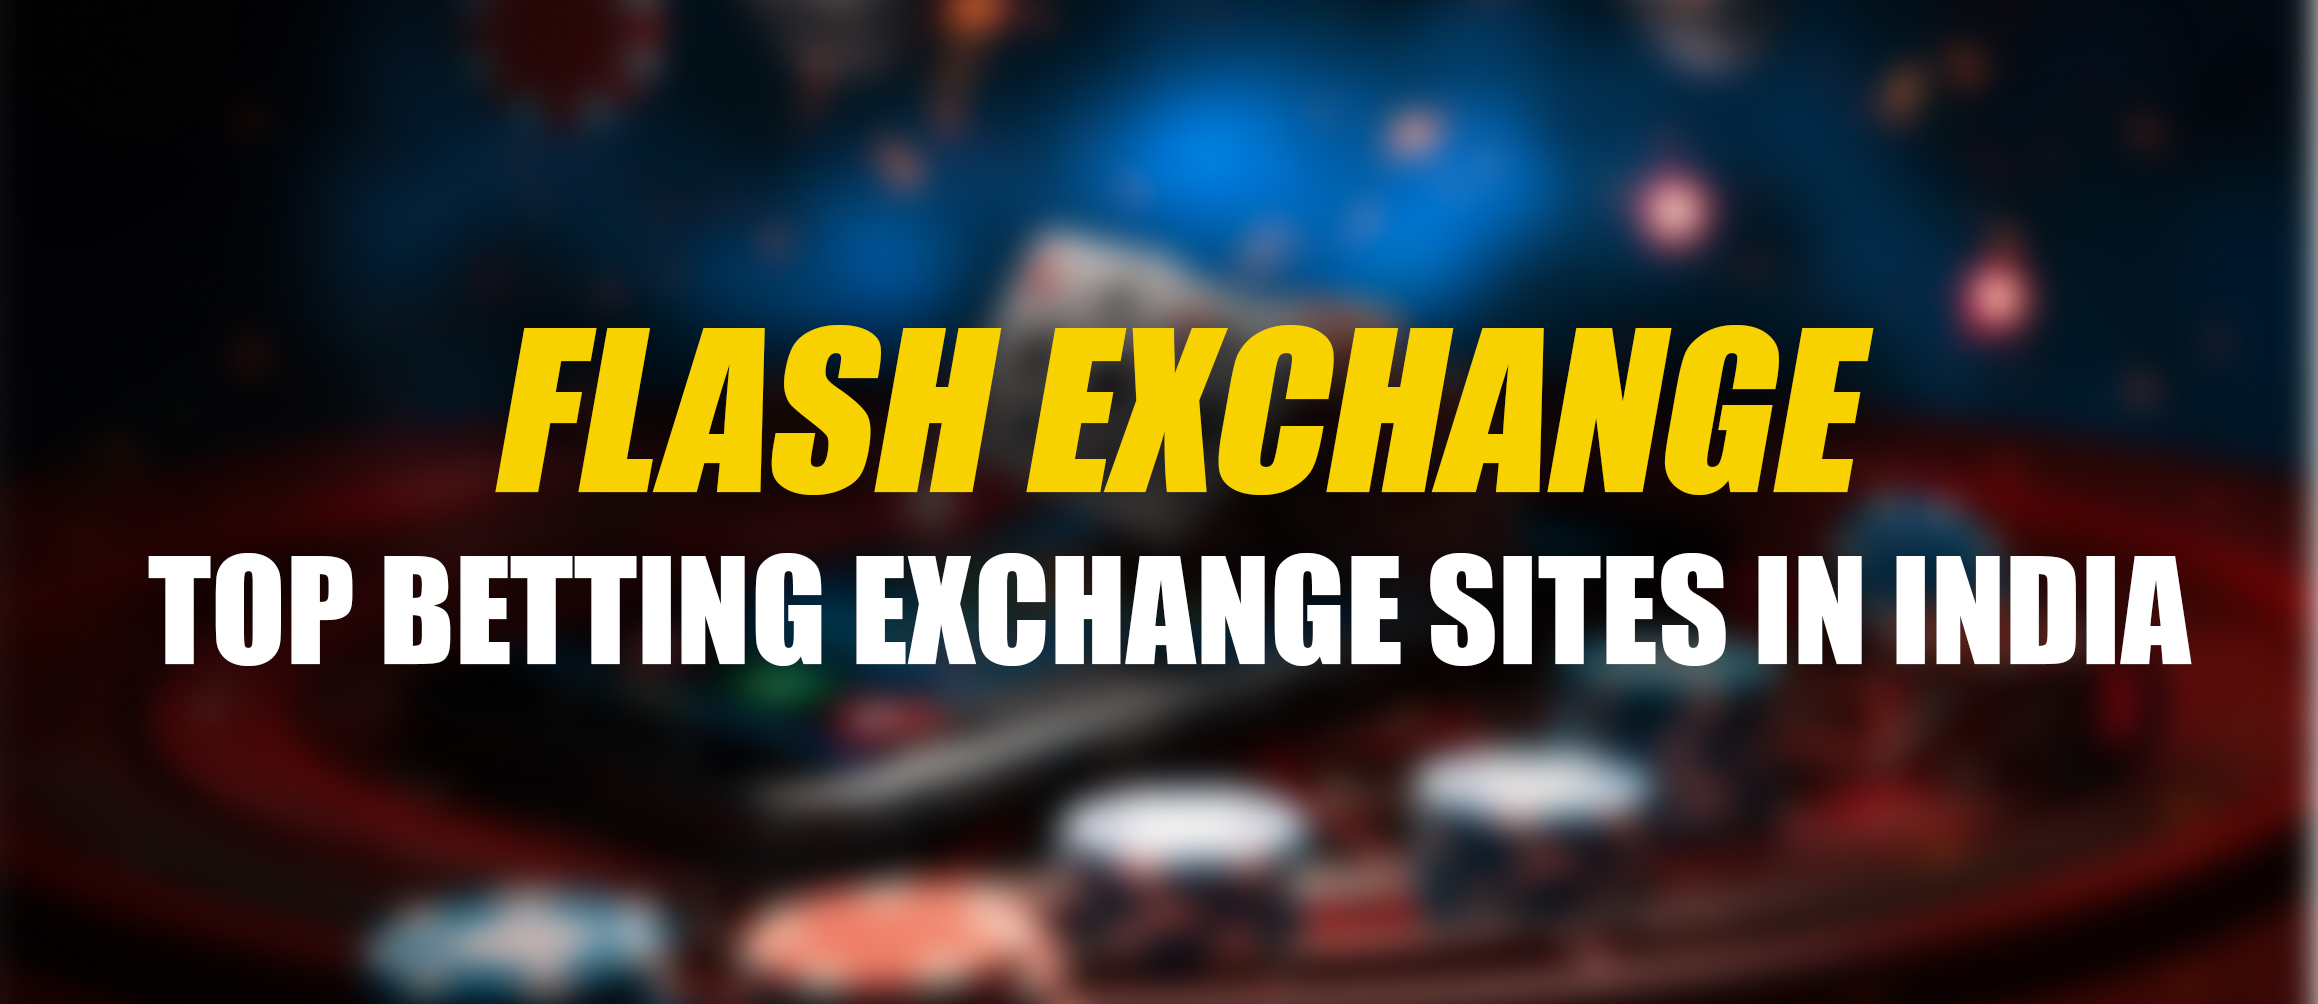 Flash Exchange: Betting exchange sites in india